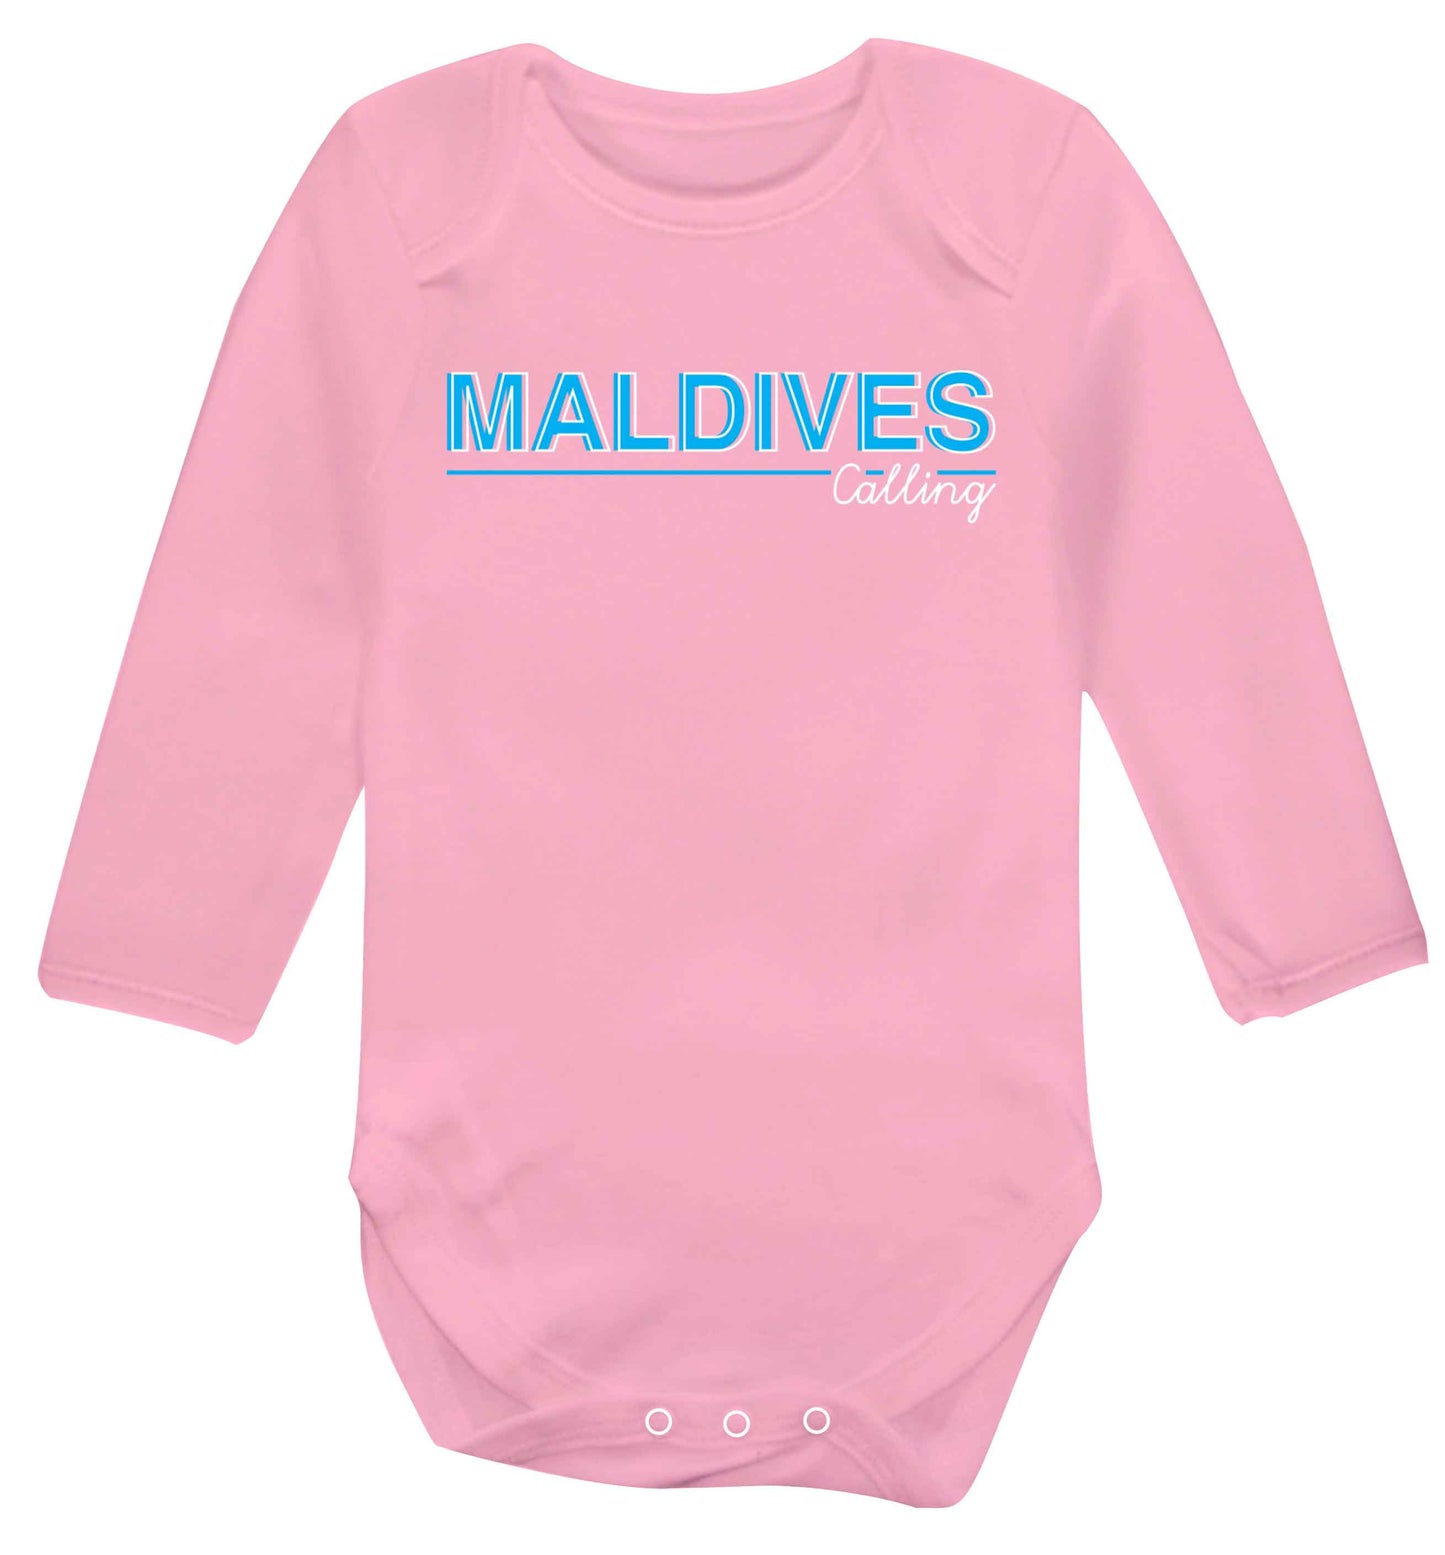 Maldives calling Baby Vest long sleeved pale pink 6-12 months